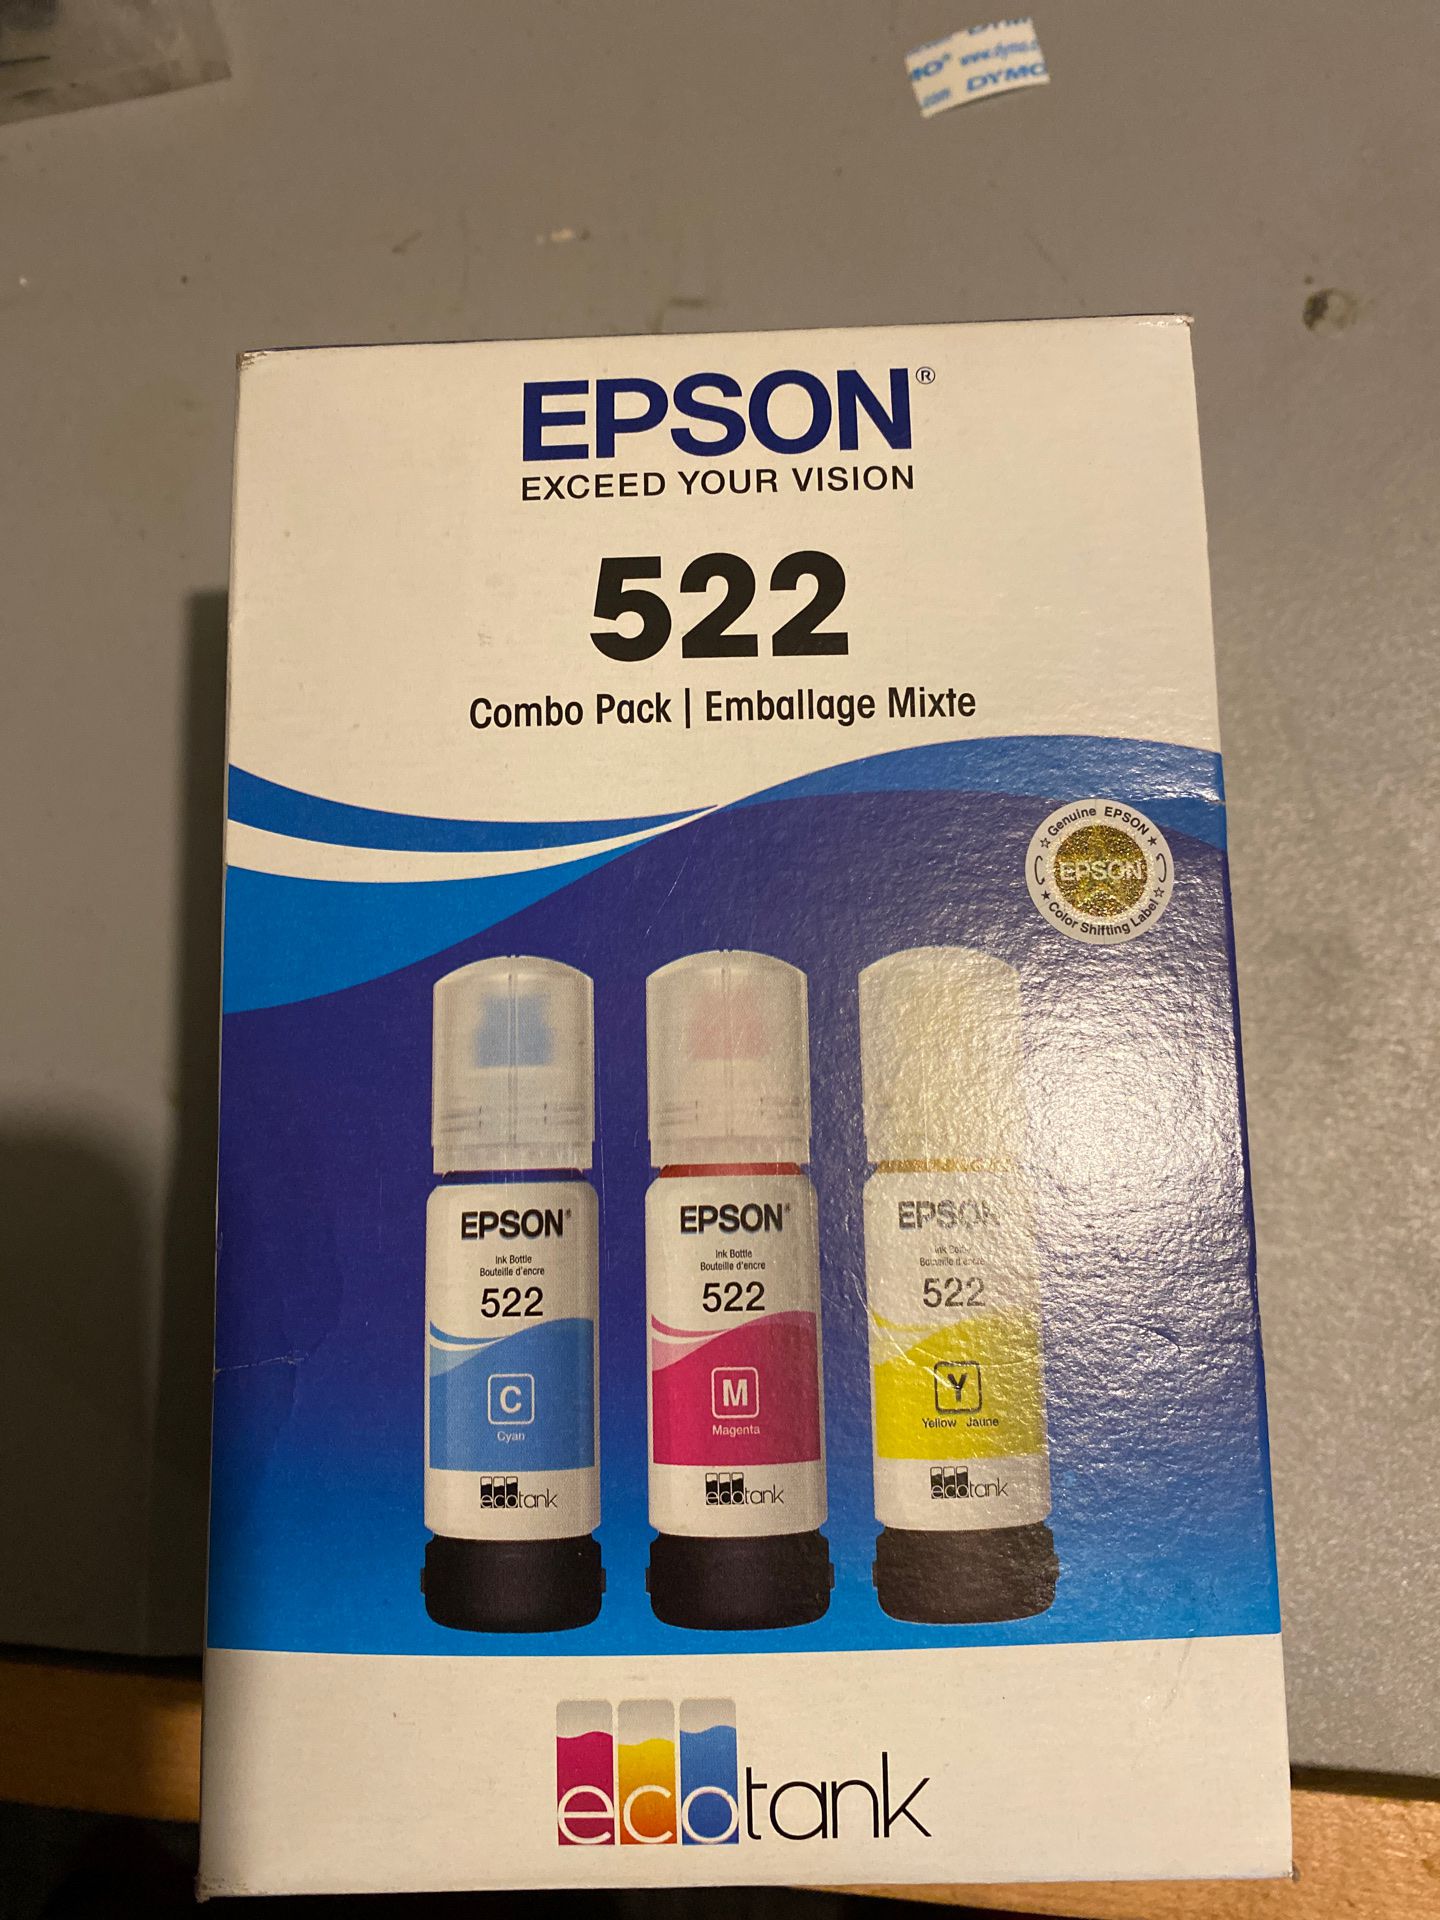 Epson 522 eco tank printer ink